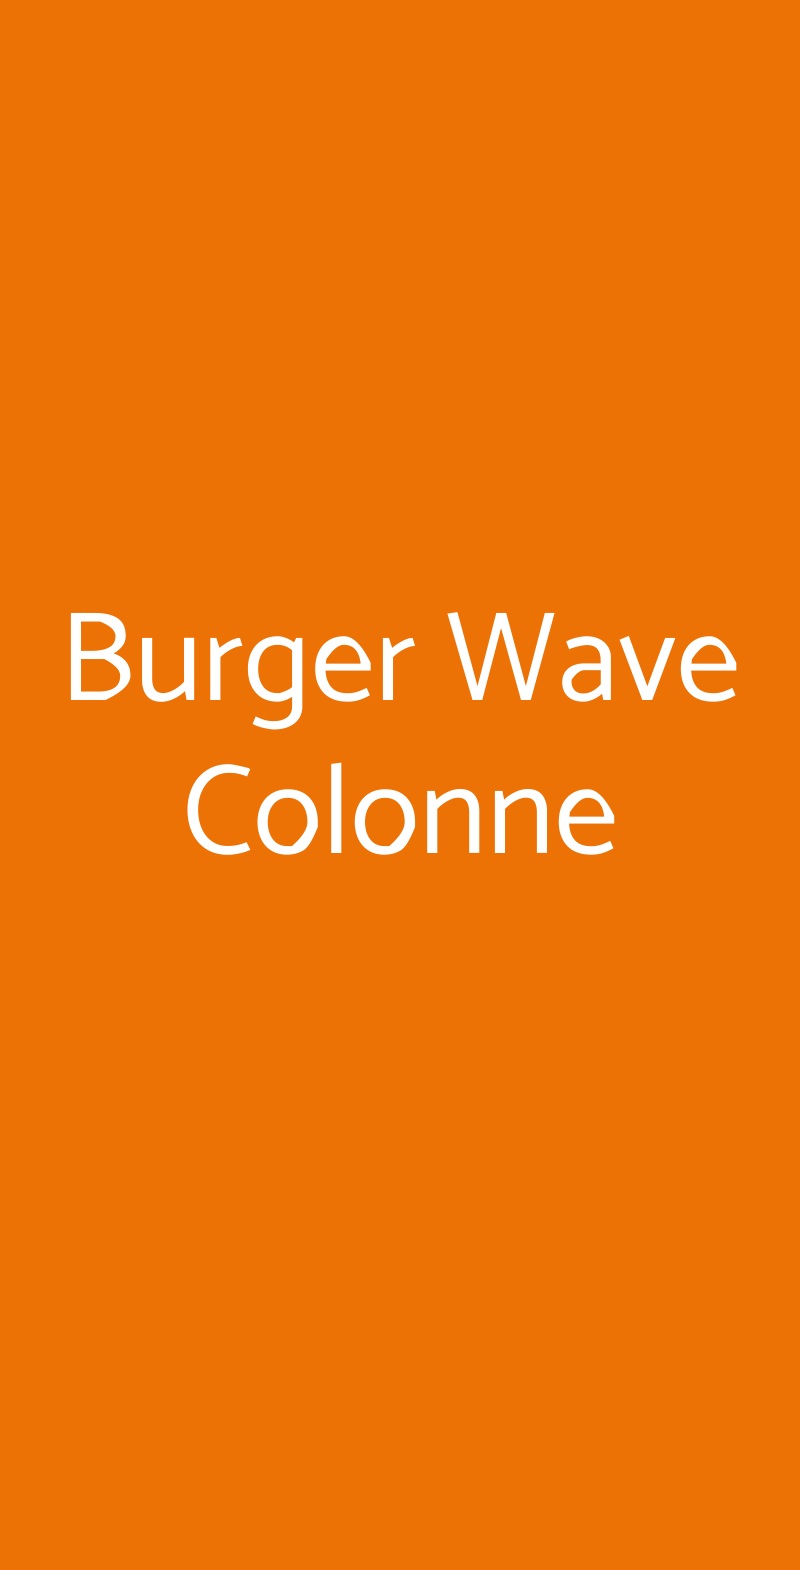 Burger Wave Colonne Milano menù 1 pagina